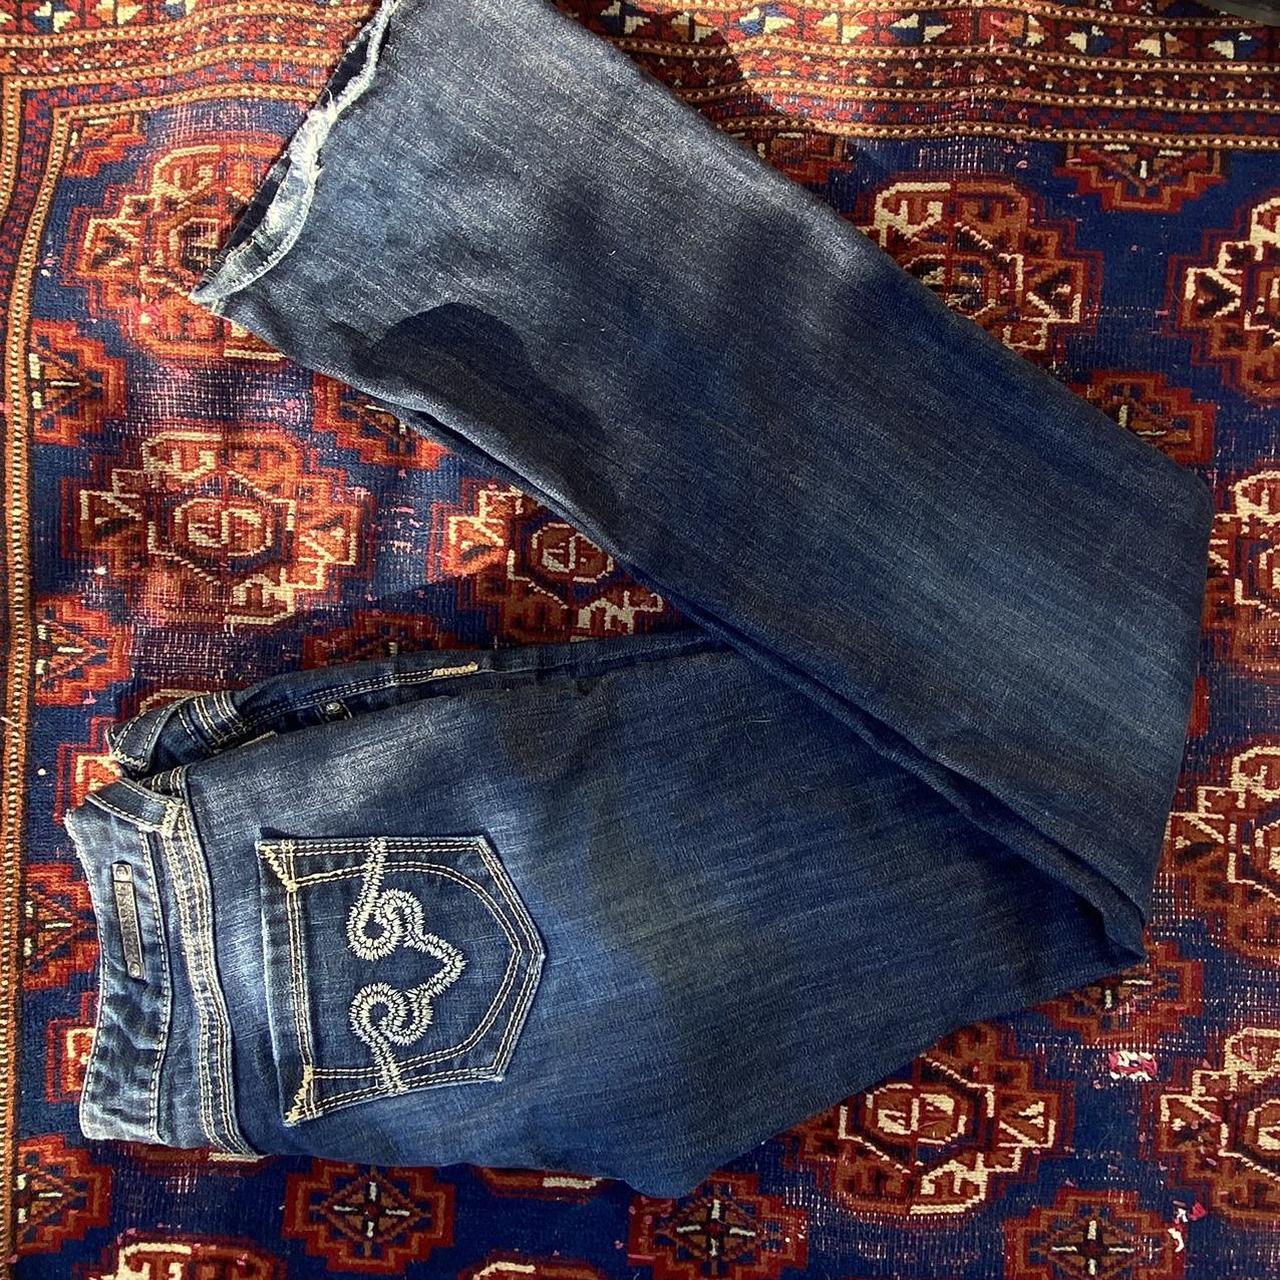 (Unisex?) Low rise dark wash bootcut ReRock jeans